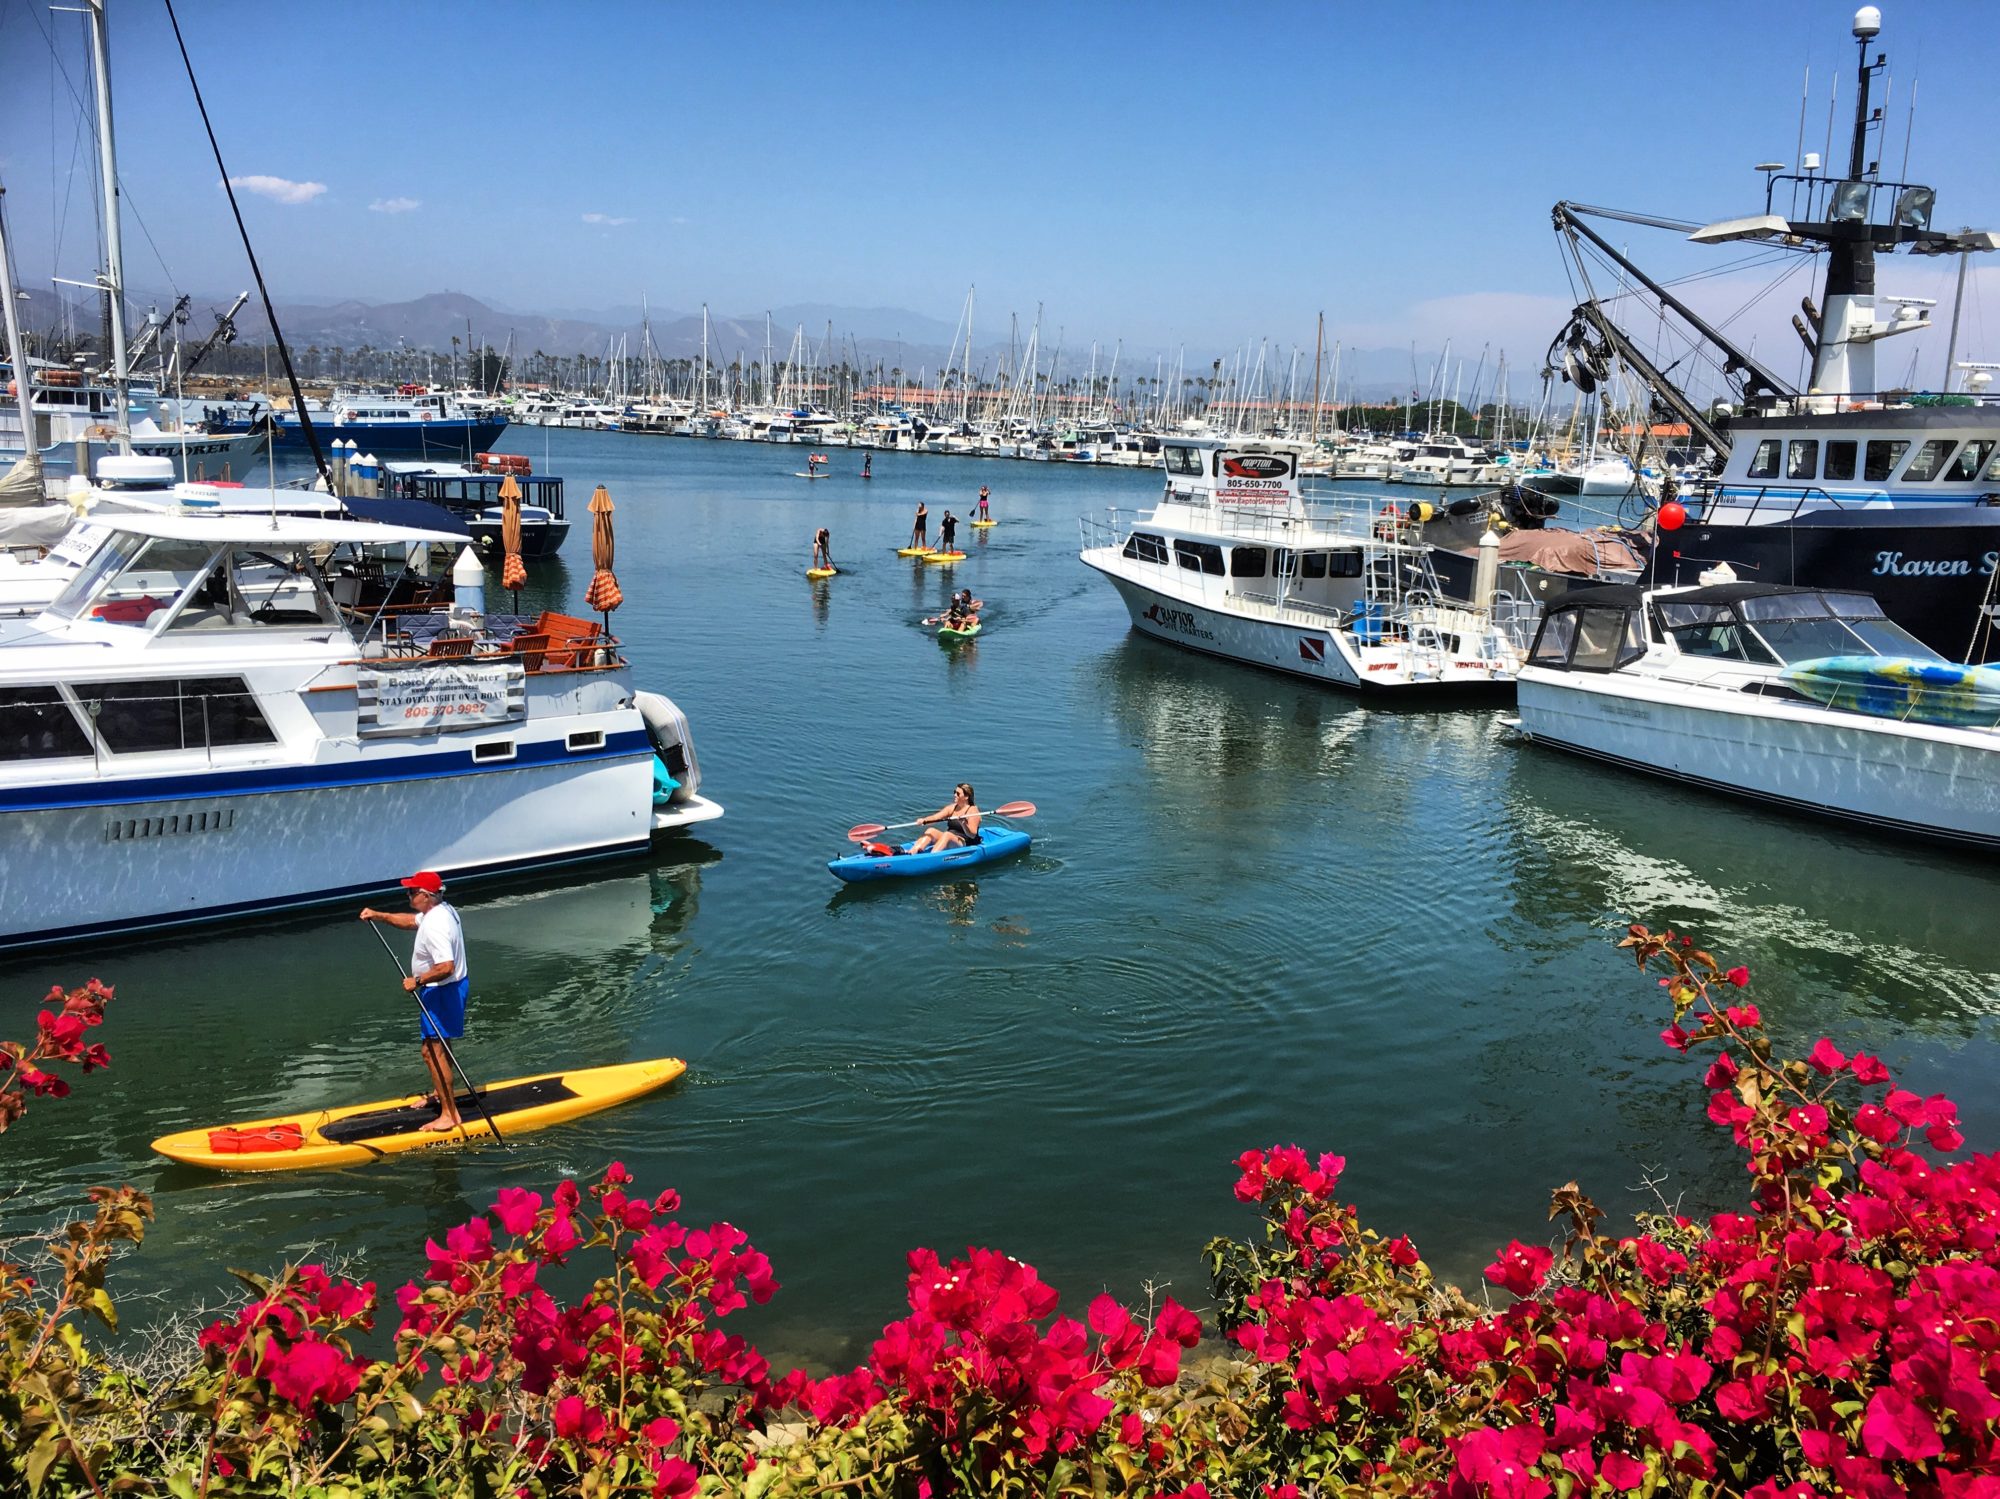 Discover Waterfront Wednesdays at Ventura Harbor Village